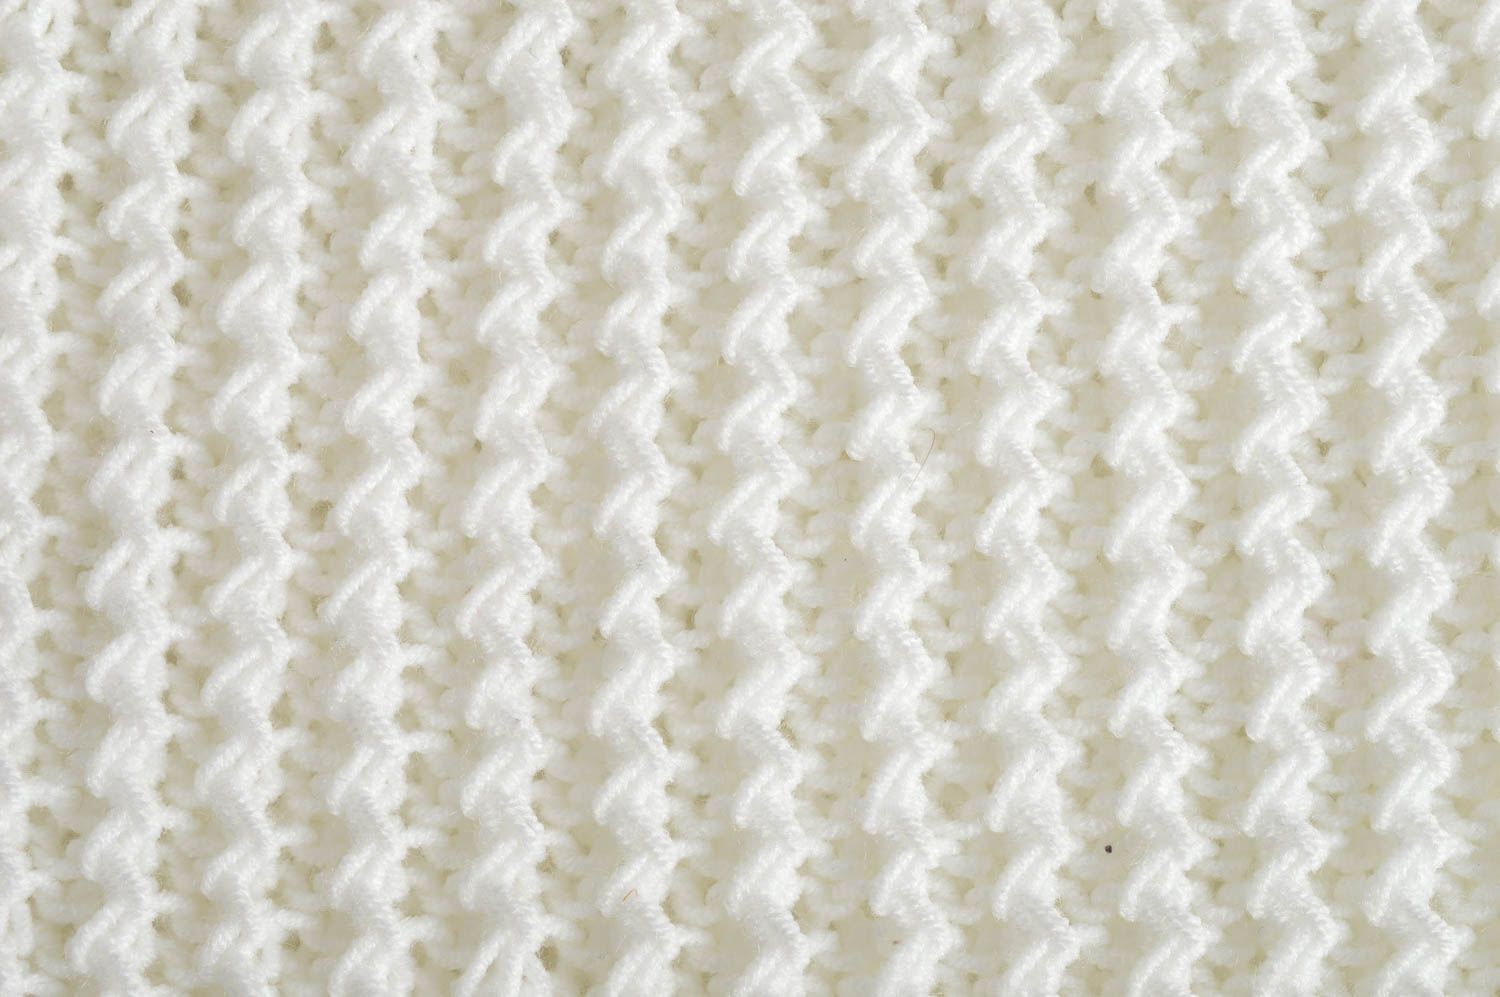 Small stylish beautiful handmade white knitted pillowcase designer accessory photo 4